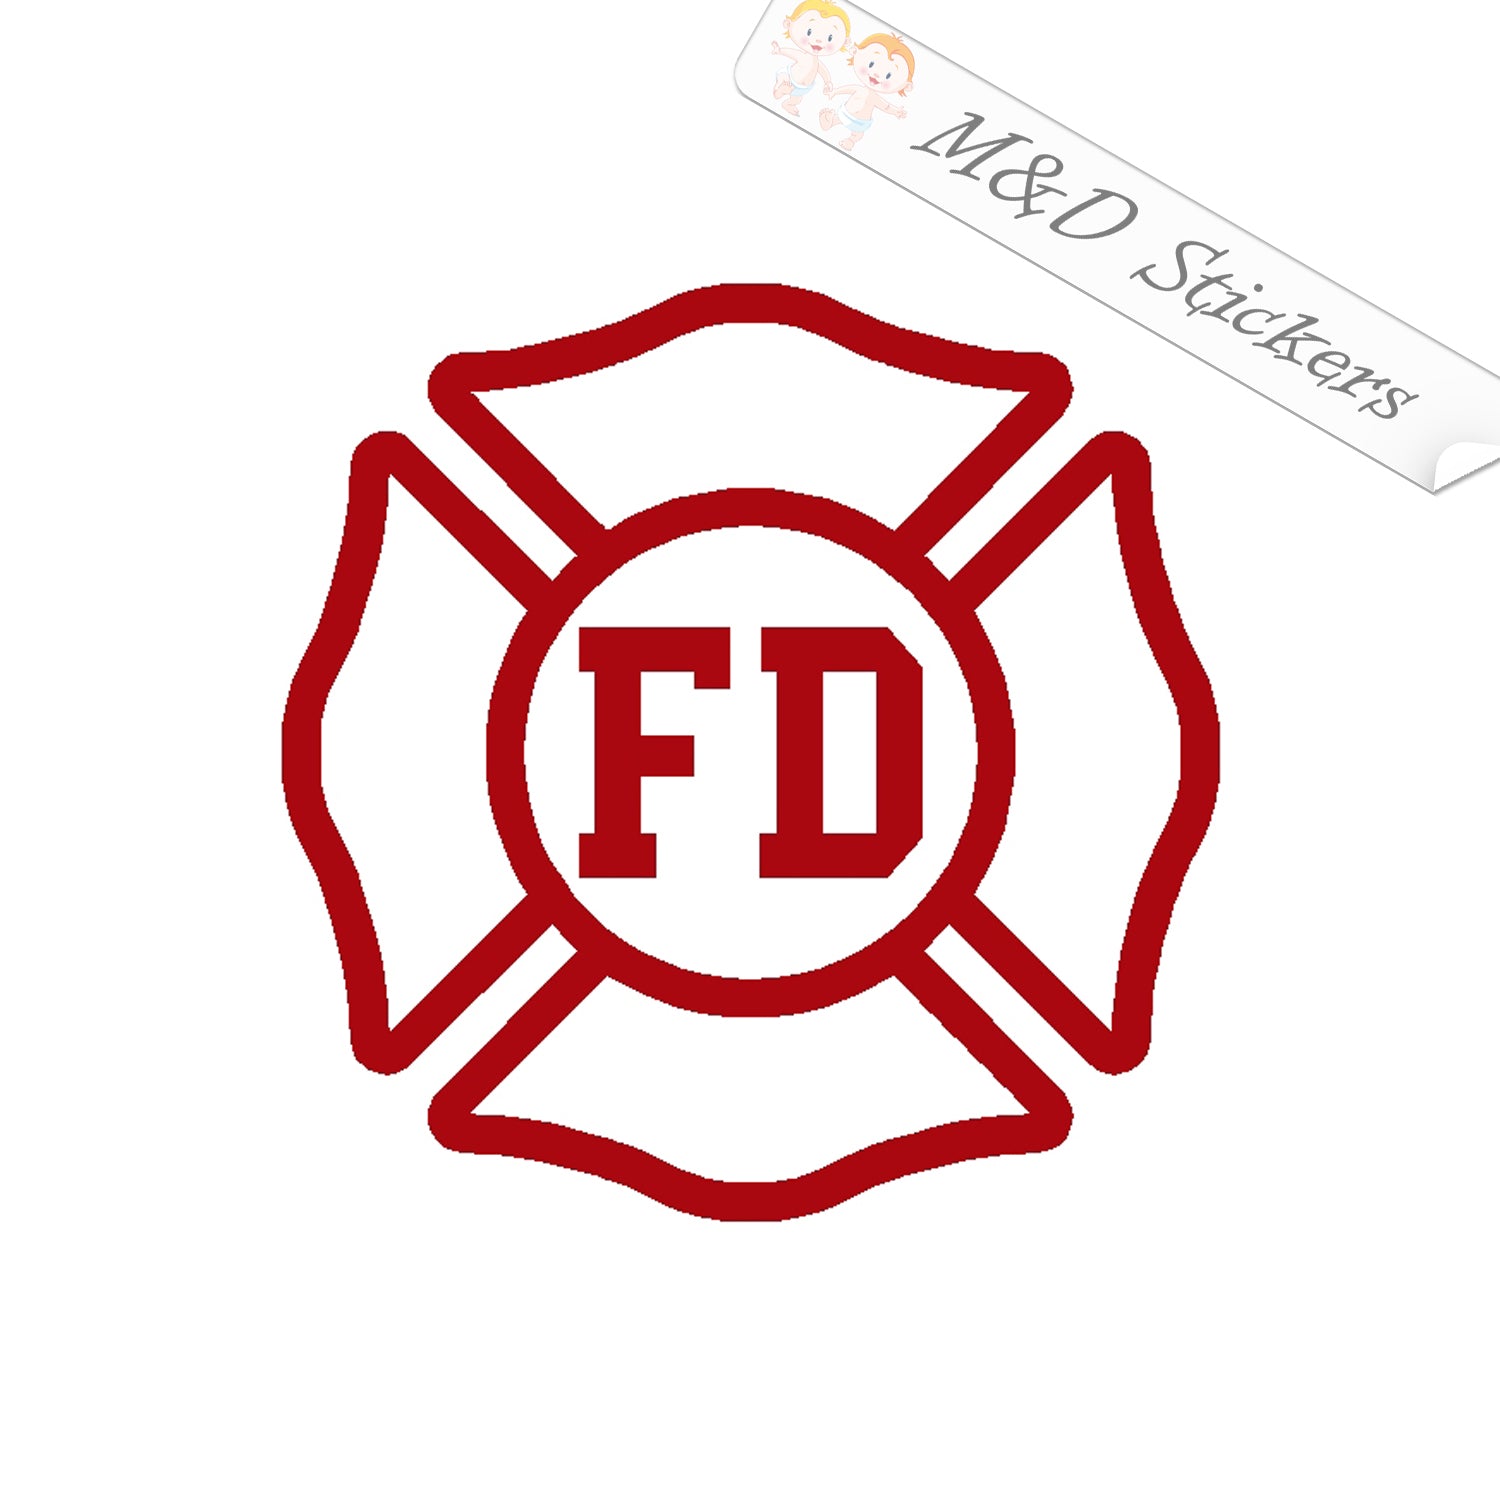 fire station symbol